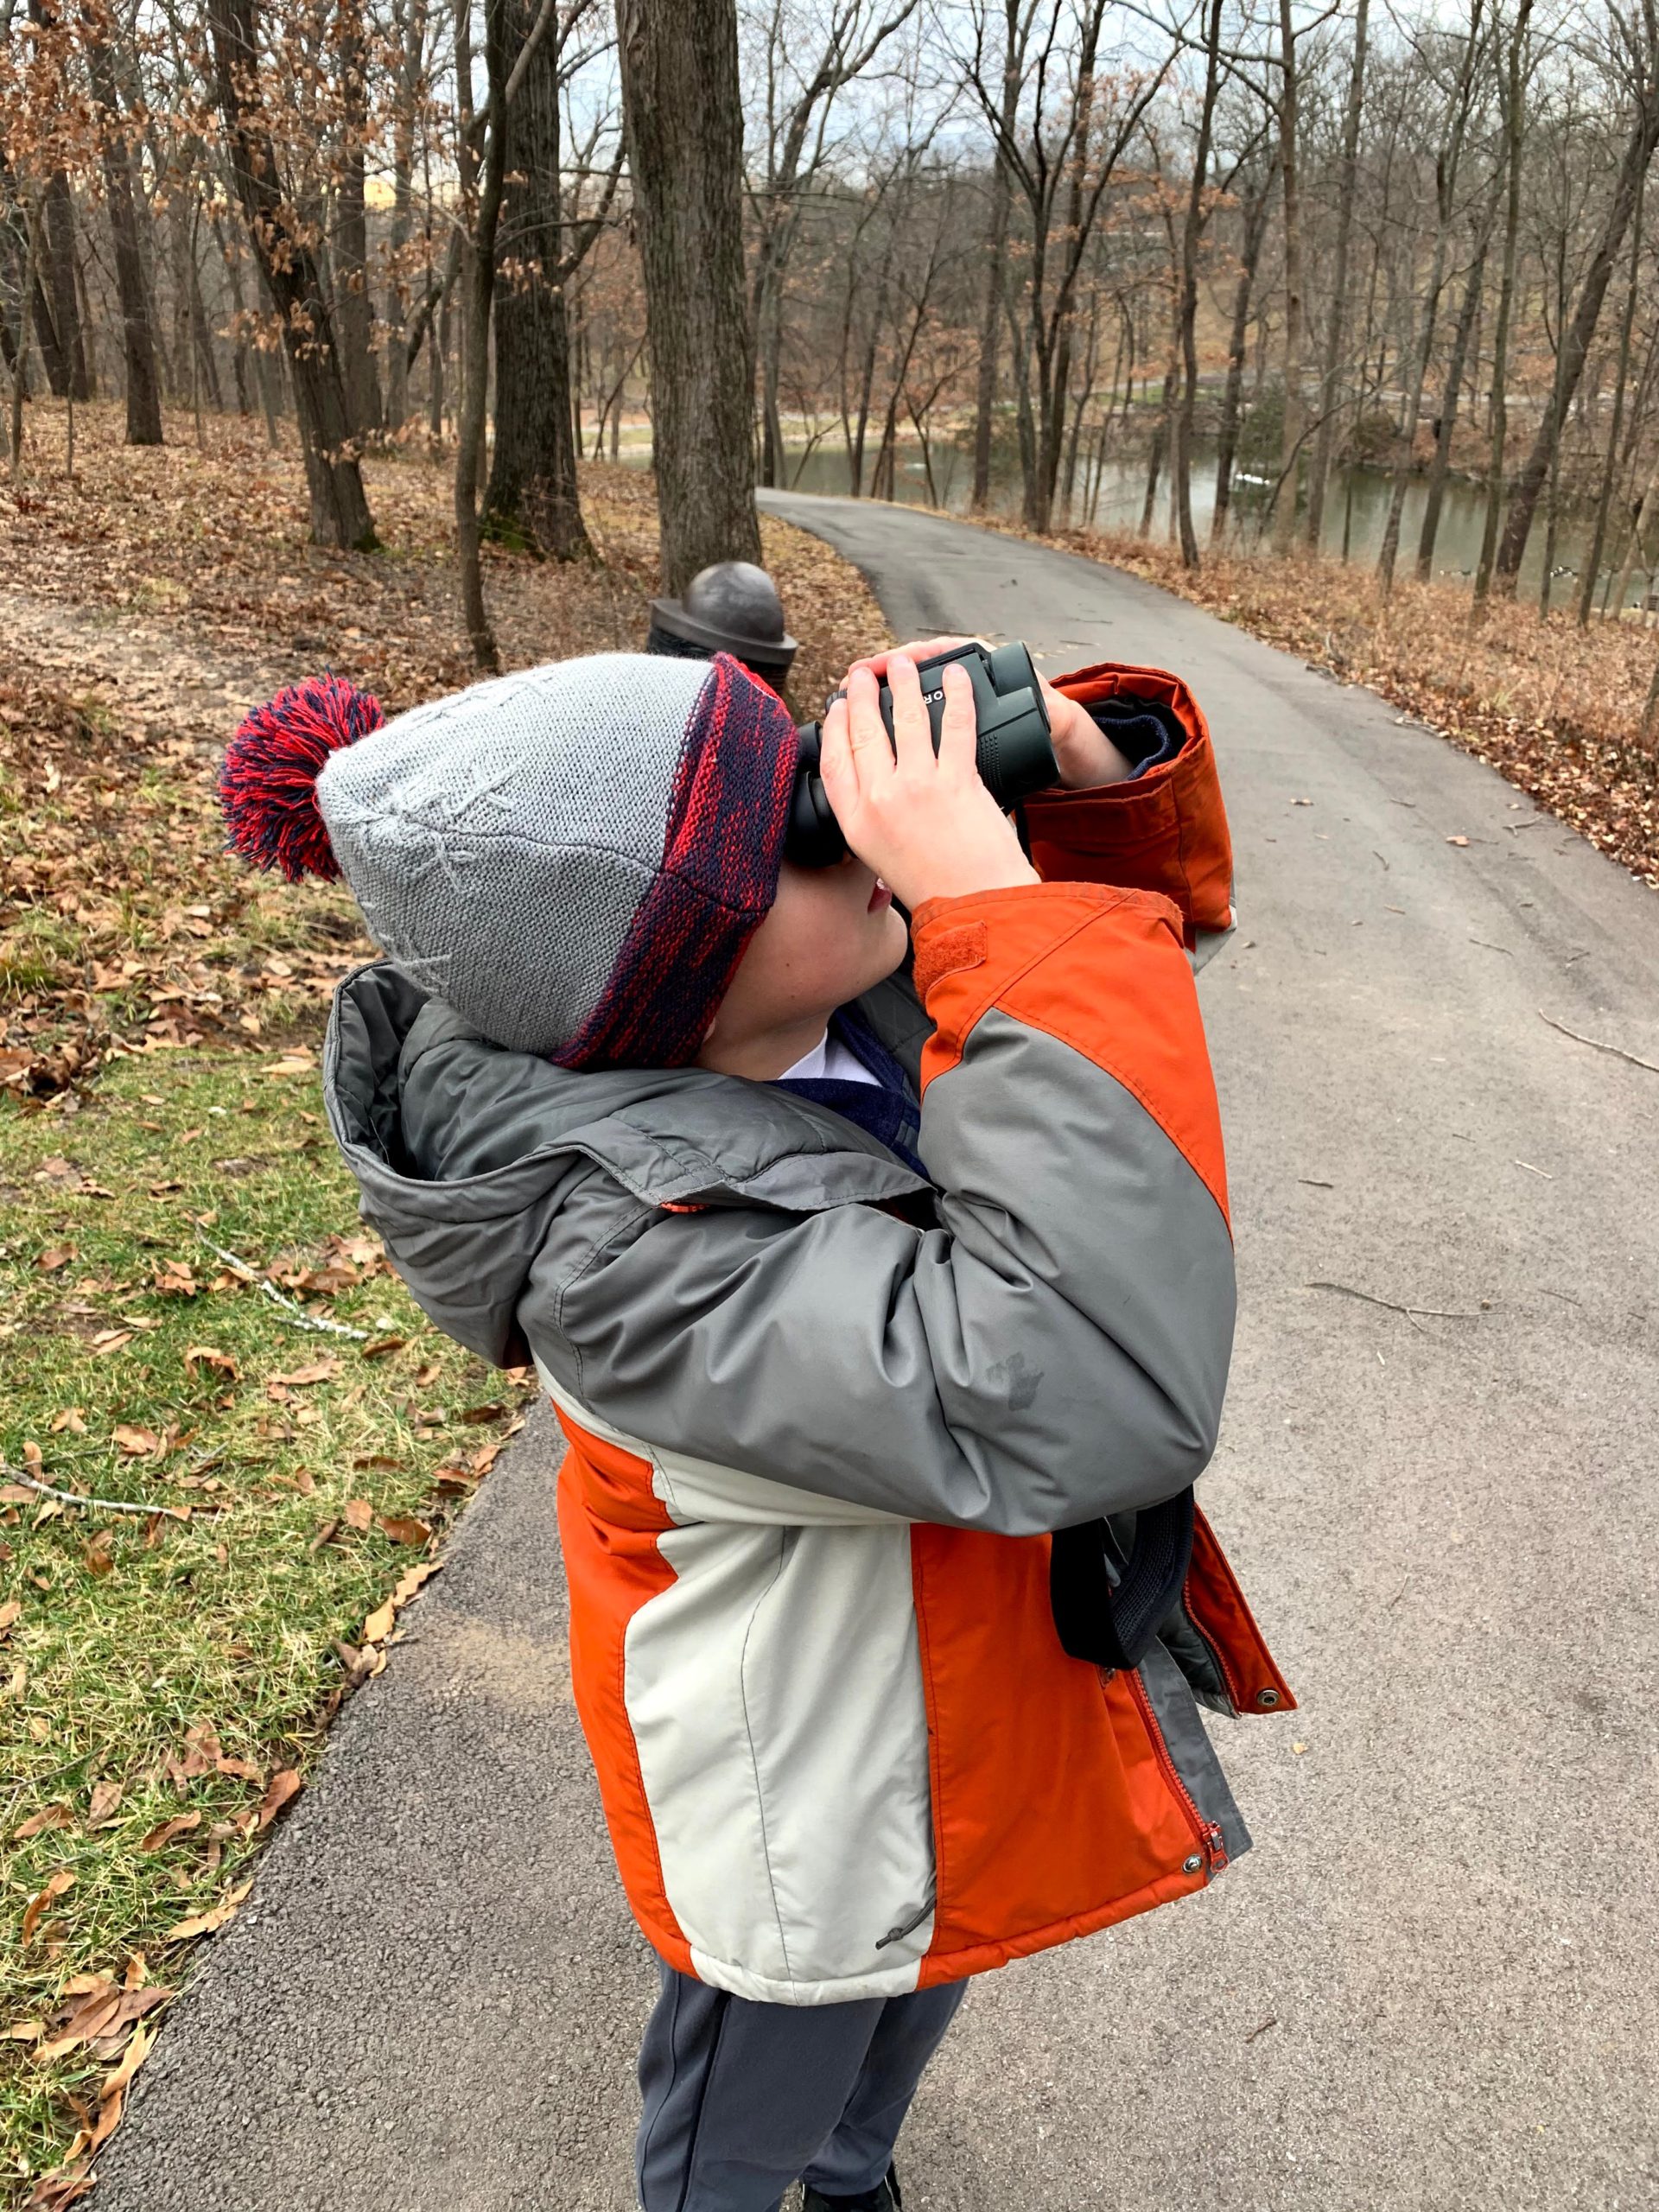 A boy on path birdwatching with binoculars